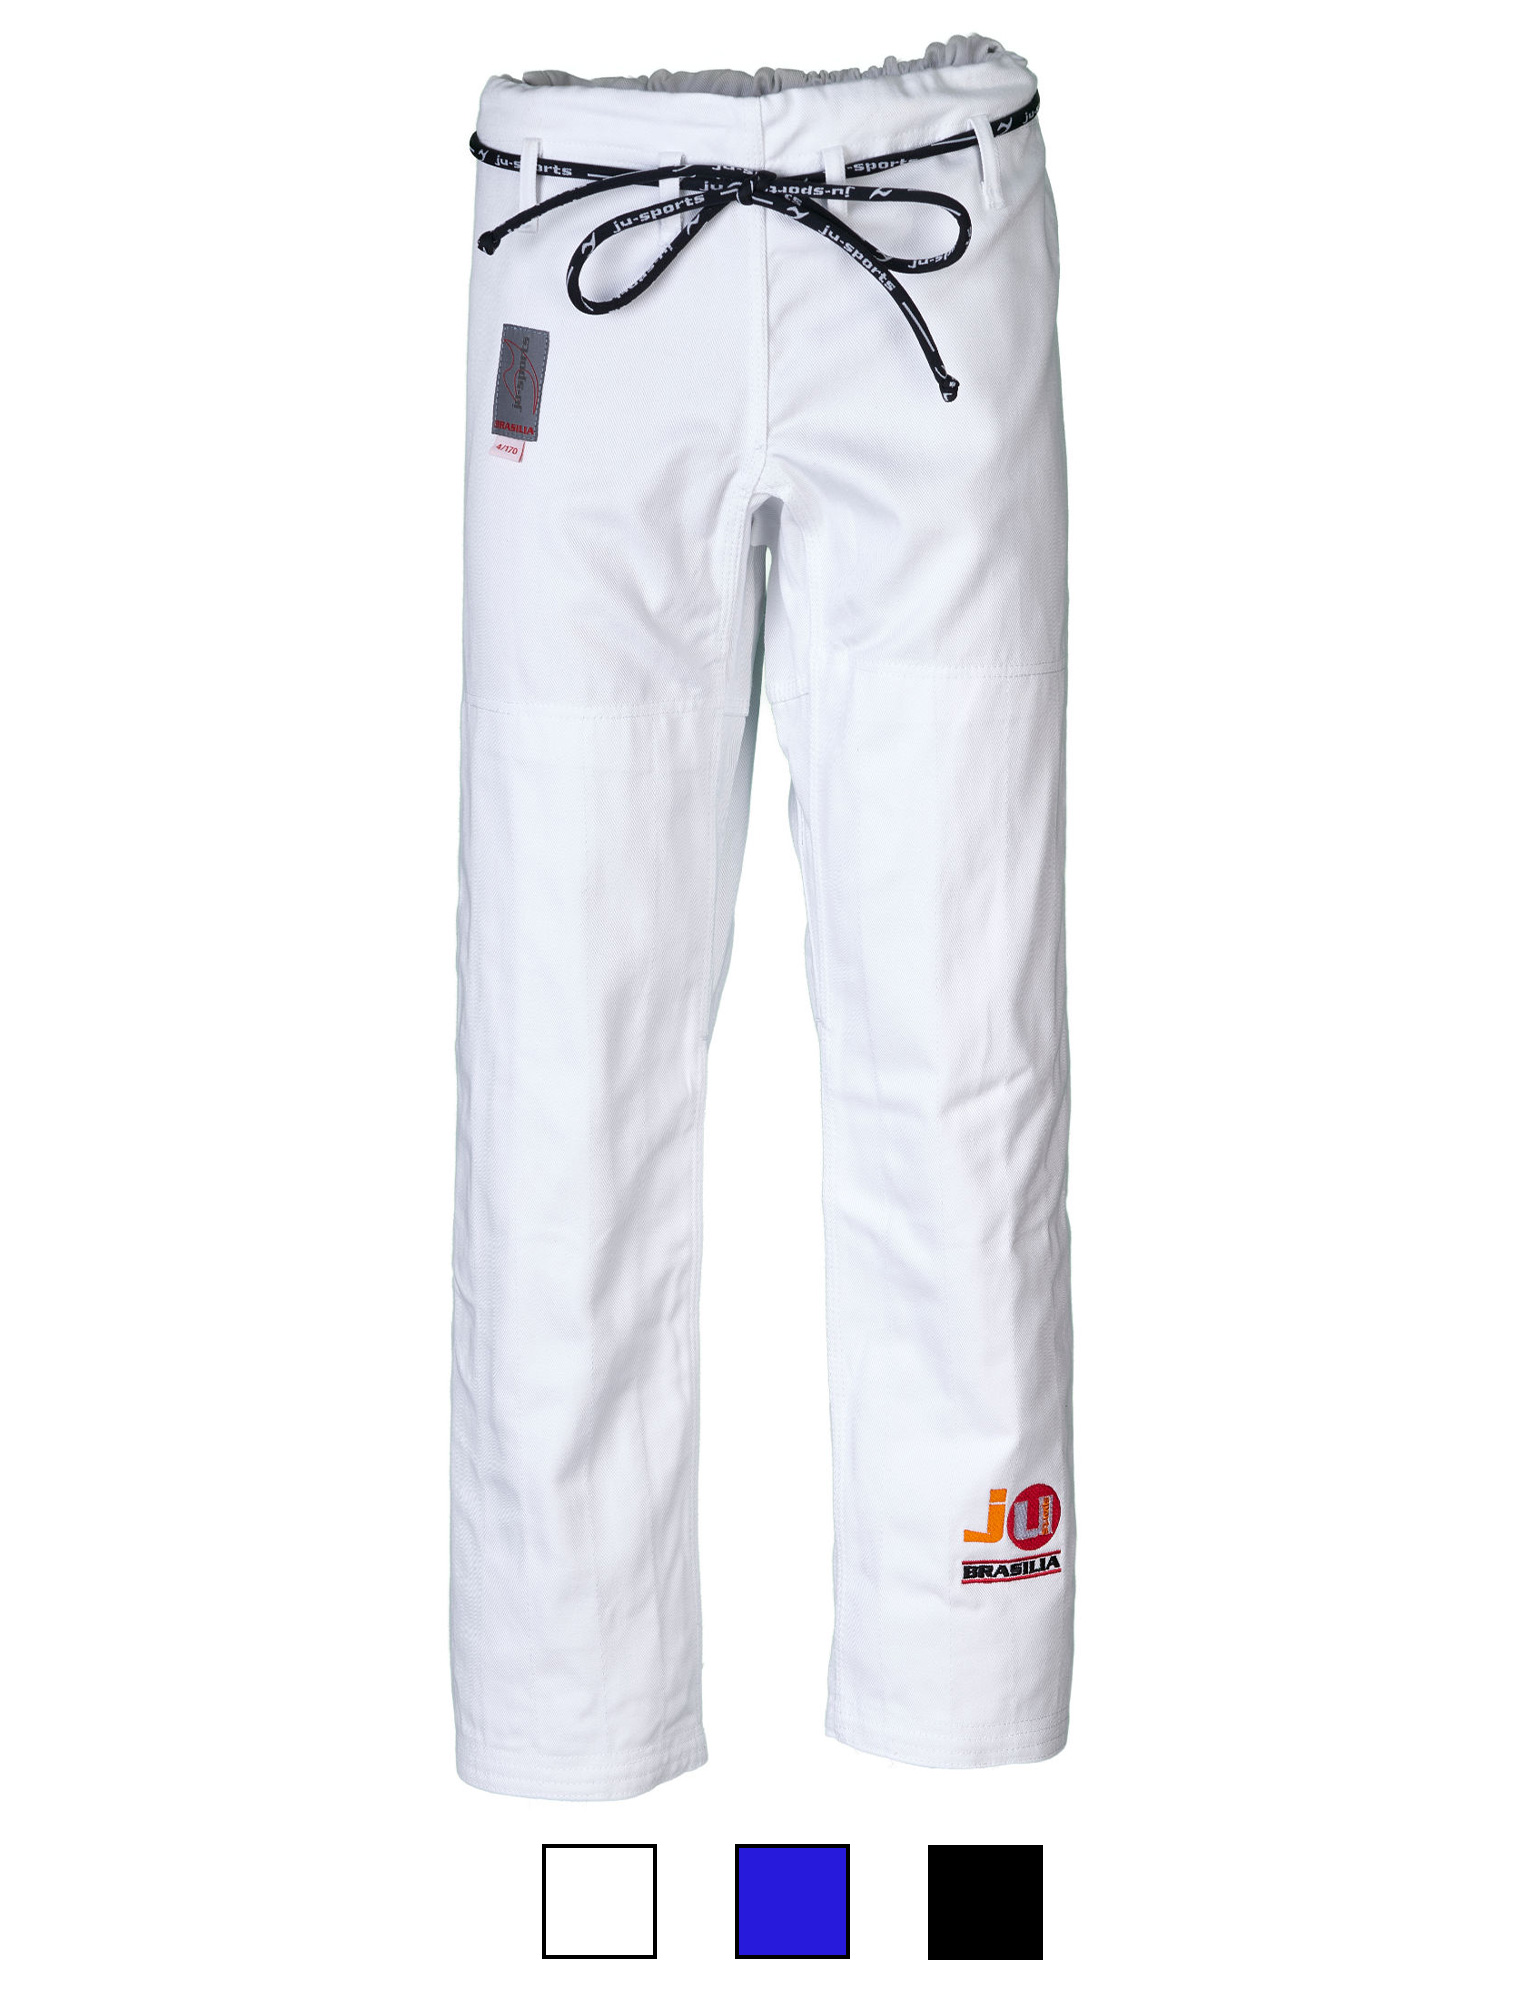 Judo pants "Brasilia", white